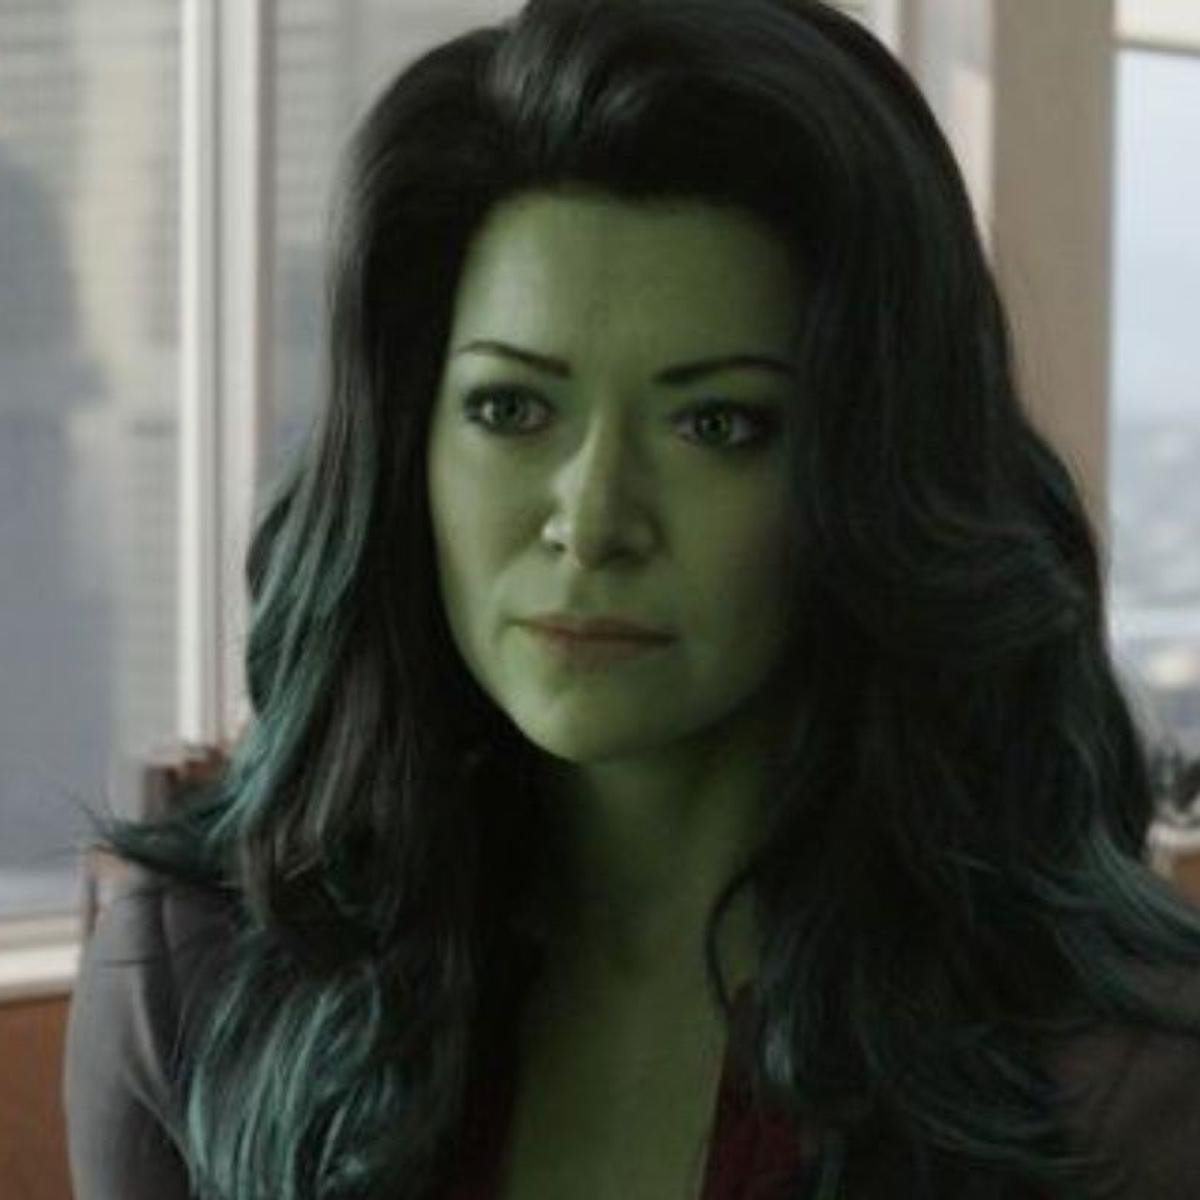 She hulk attorney at law. Женщина-Халк: адвокат.